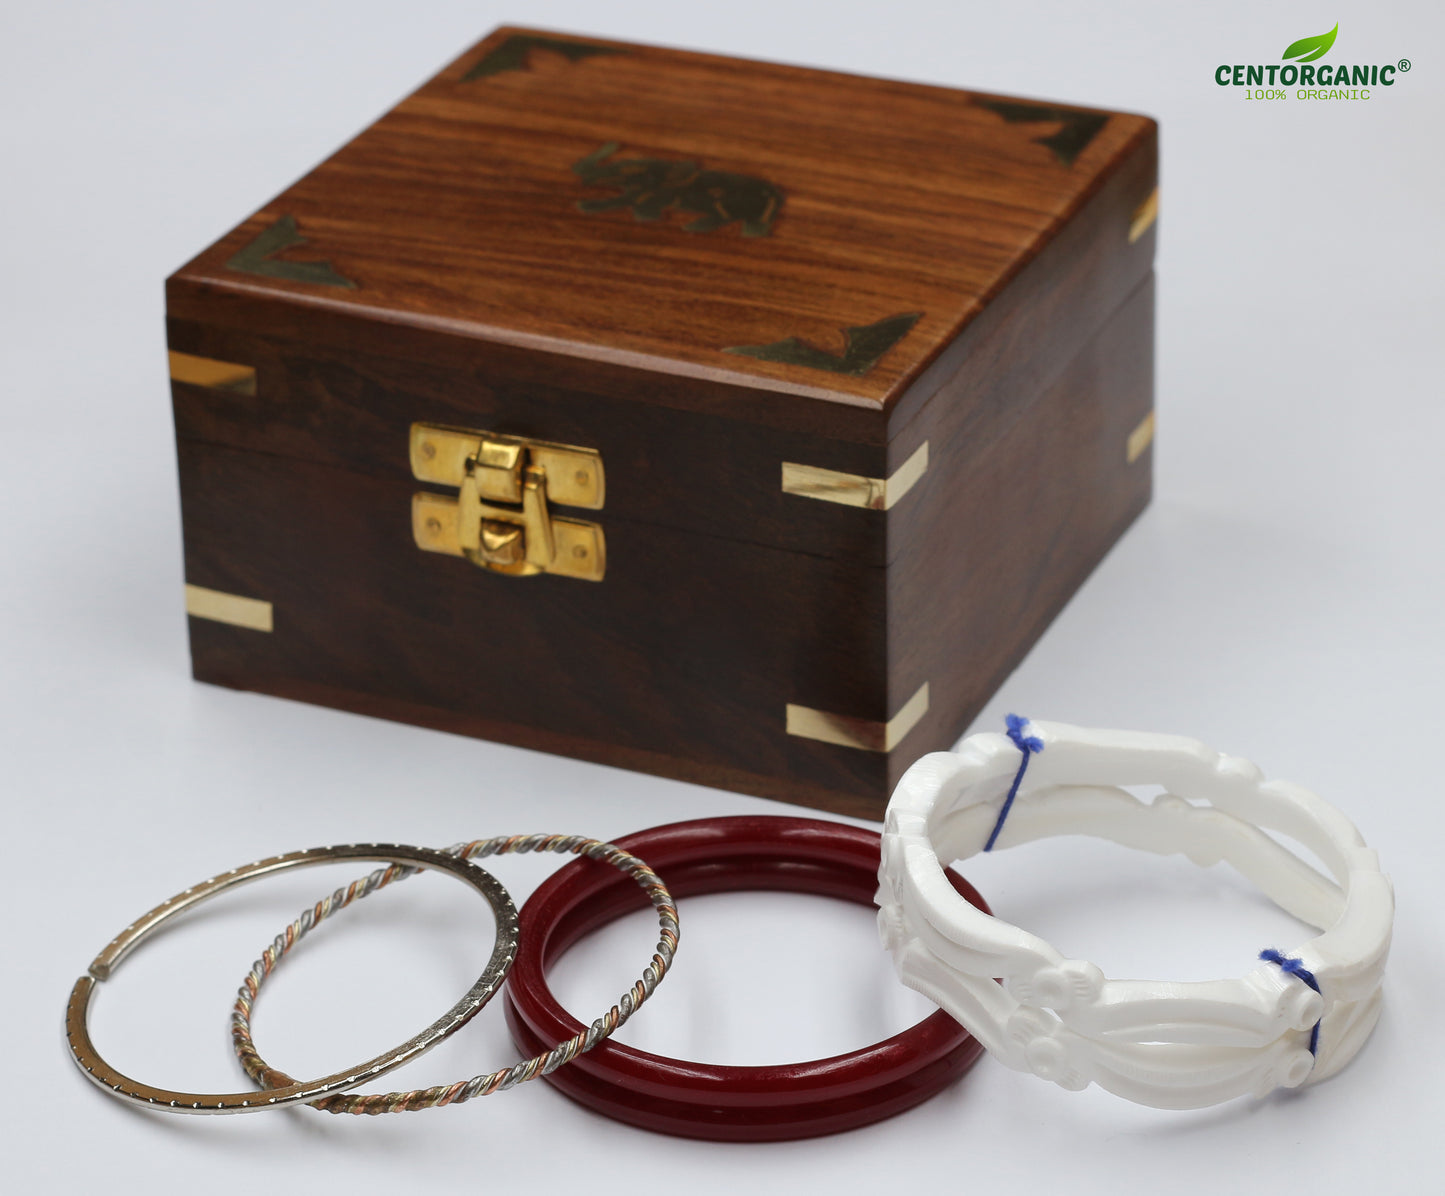 Centorganic Cutting Design sankha pola bangles for women, 1 pair of sankha, 1 pair of red pola, 2 iron noa, with free wooden jewellery box. (Design code: CSBM04)